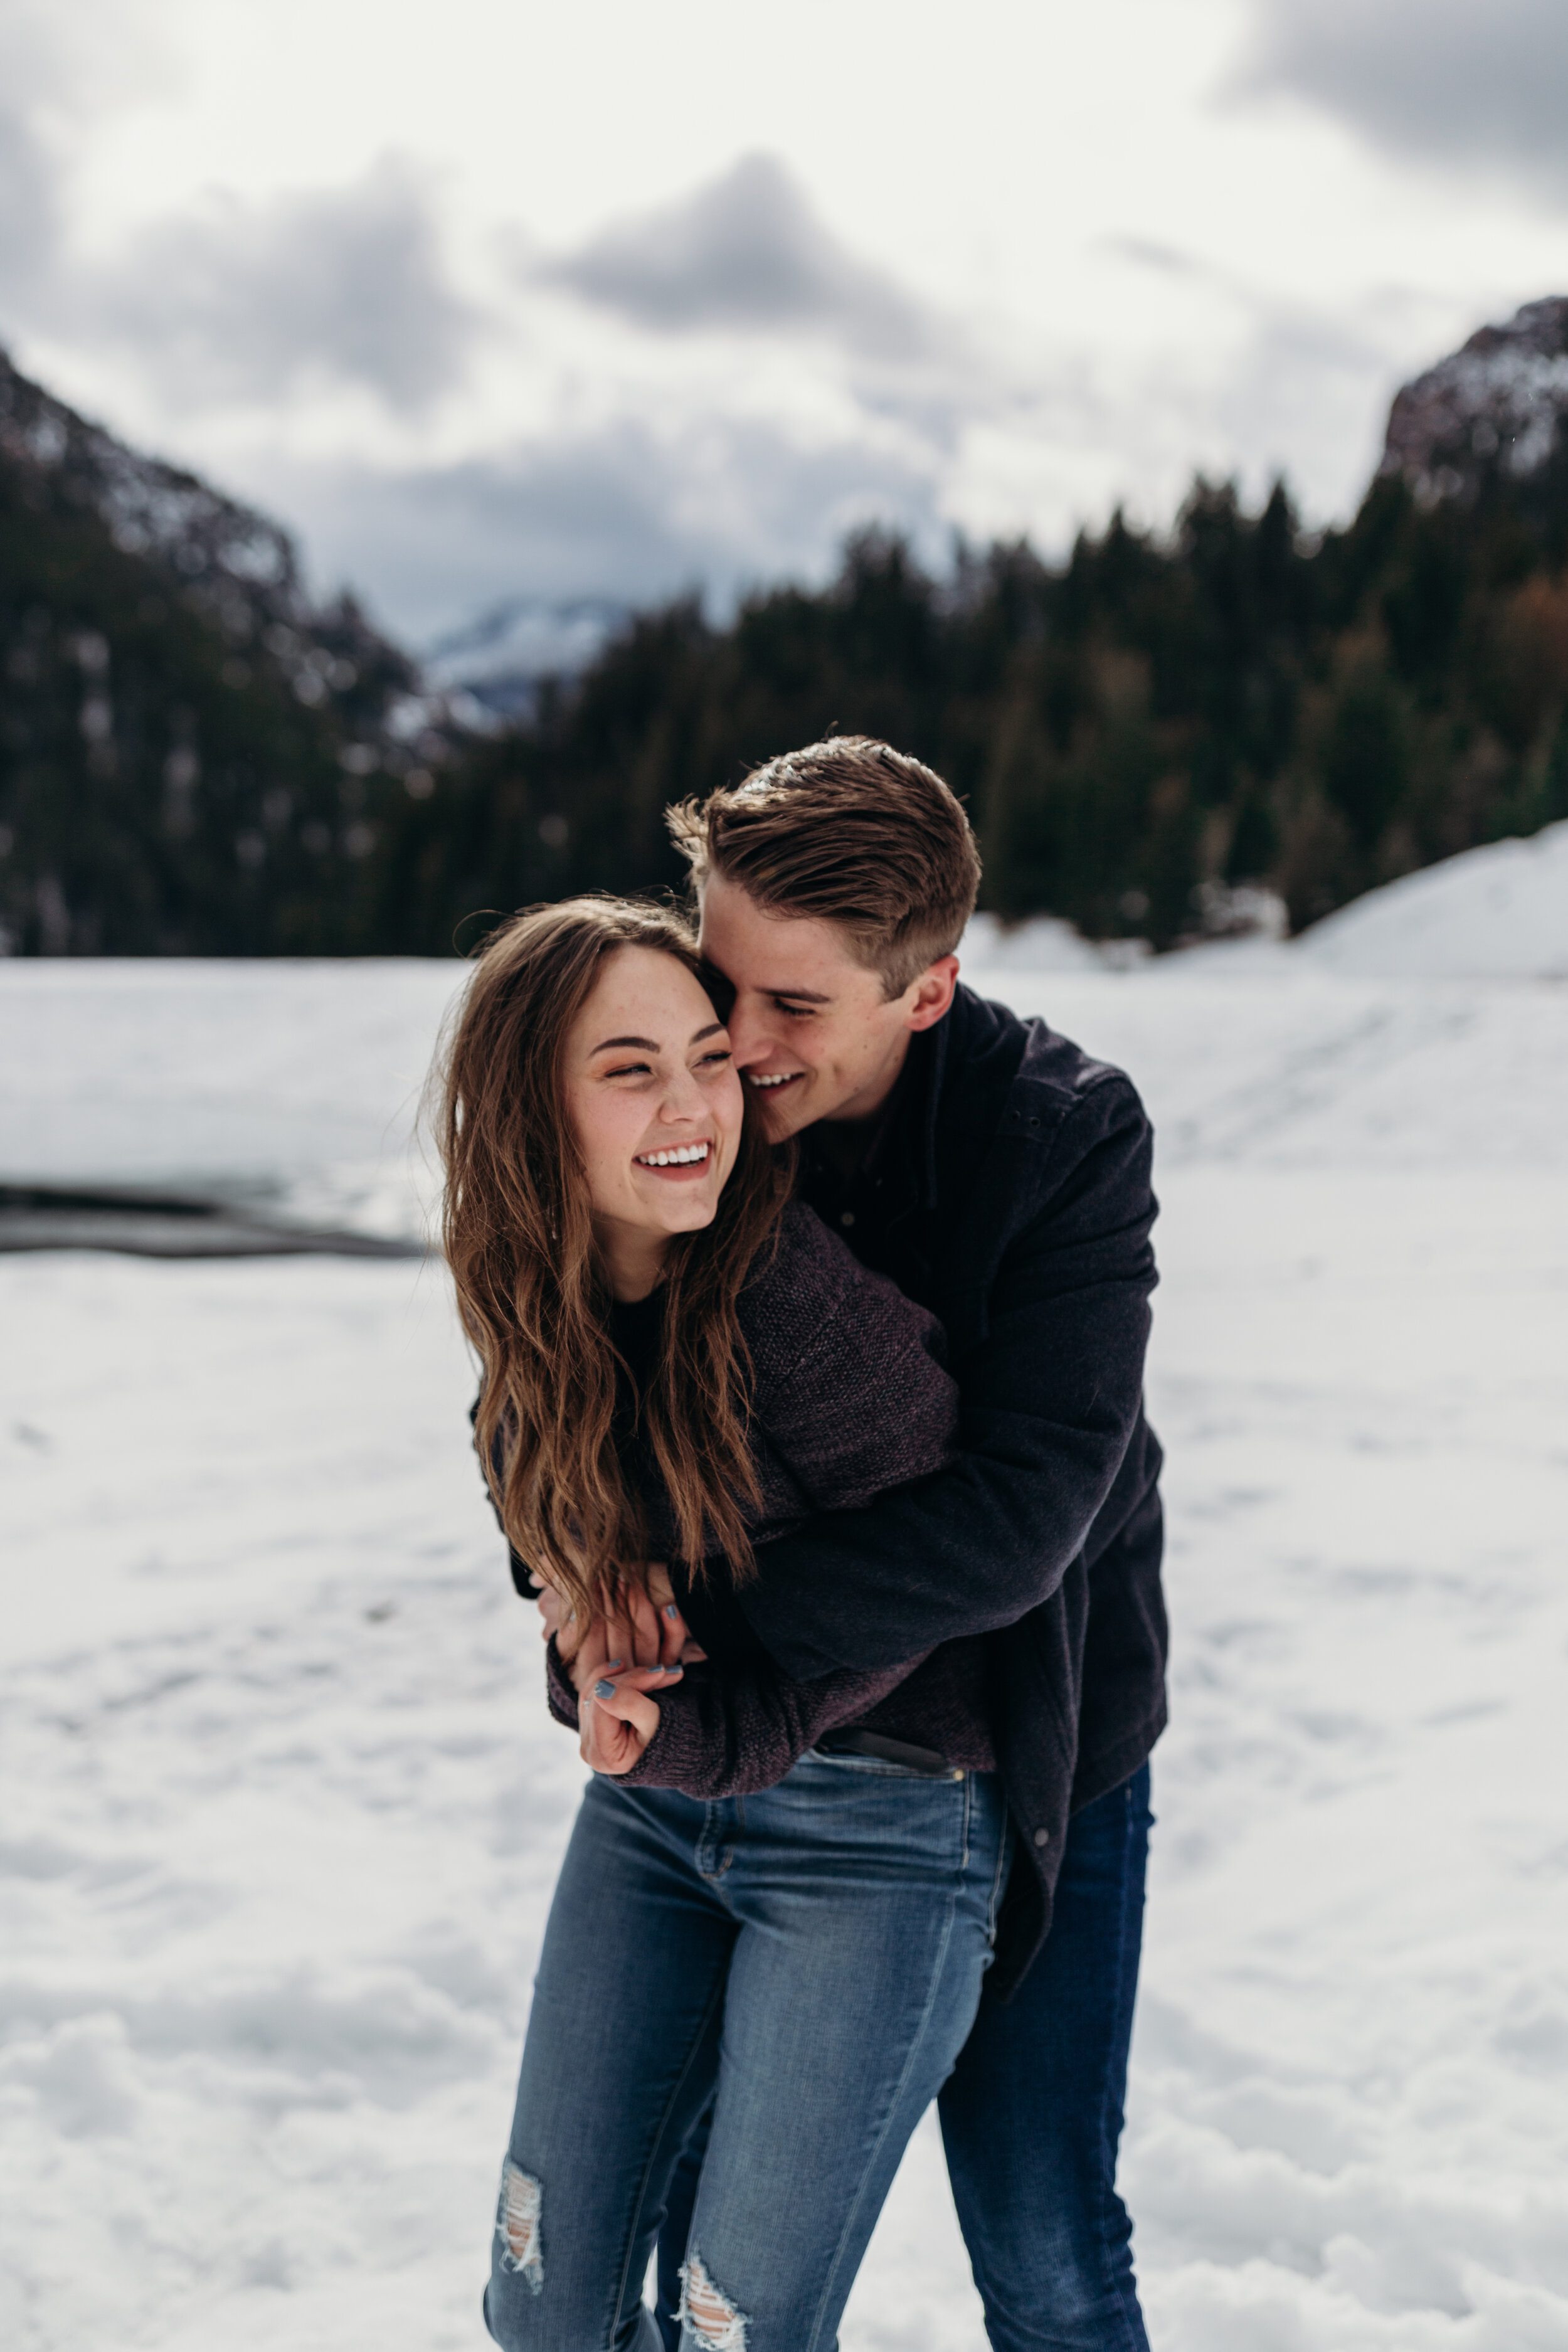 Snowy winter mountain engagements windy hair ice lake pine trees laughing couple shoot #coupleshoot #utahphotographer #weddingphotographer #engagements #engagementshoot #winterengagements